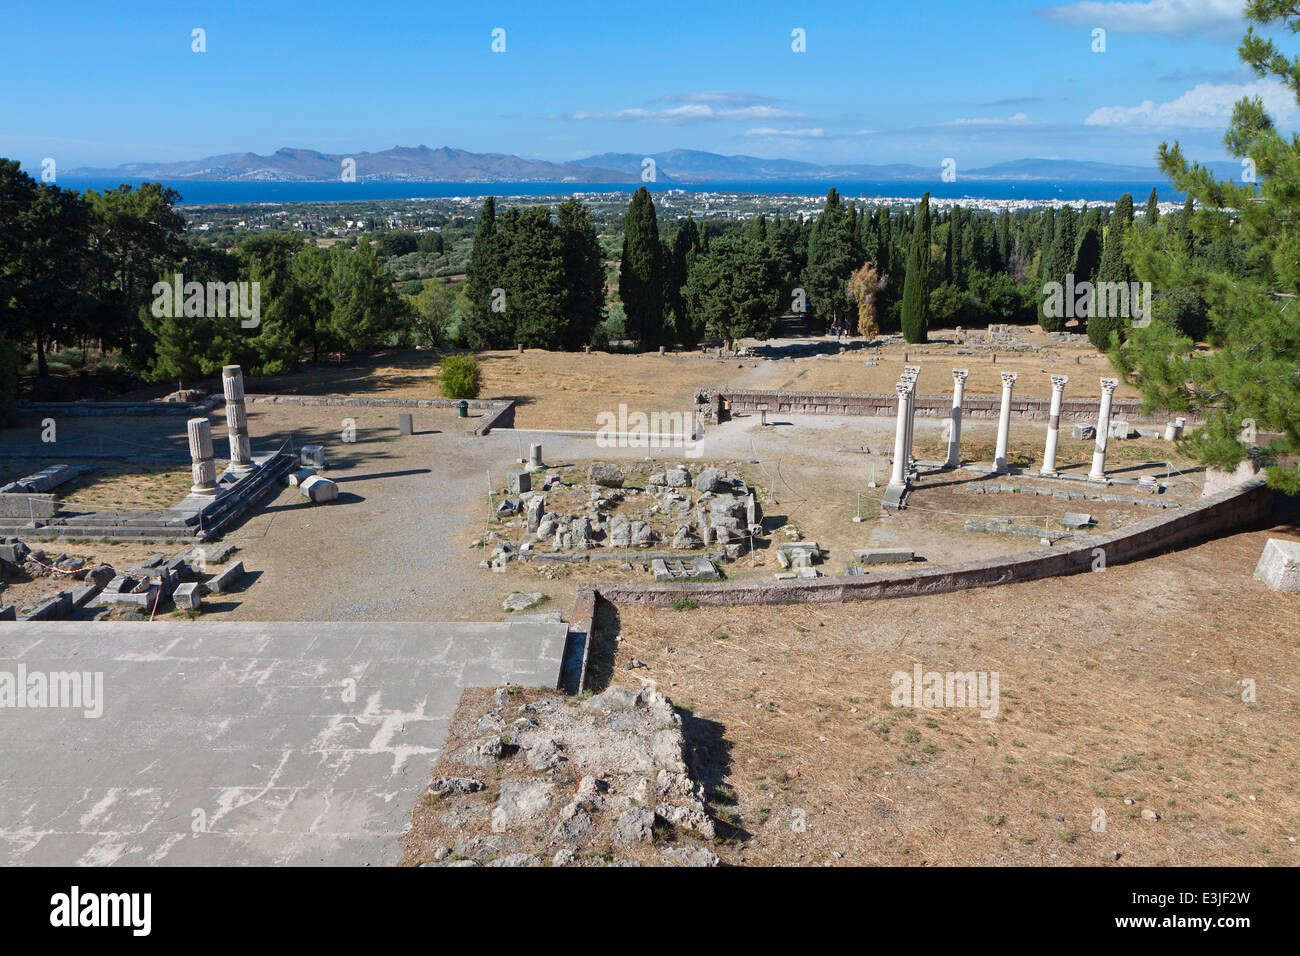 The sanctuary of Asklepius (Asklepieion or Asclepio) at Kos island in Greece. Stock Photo